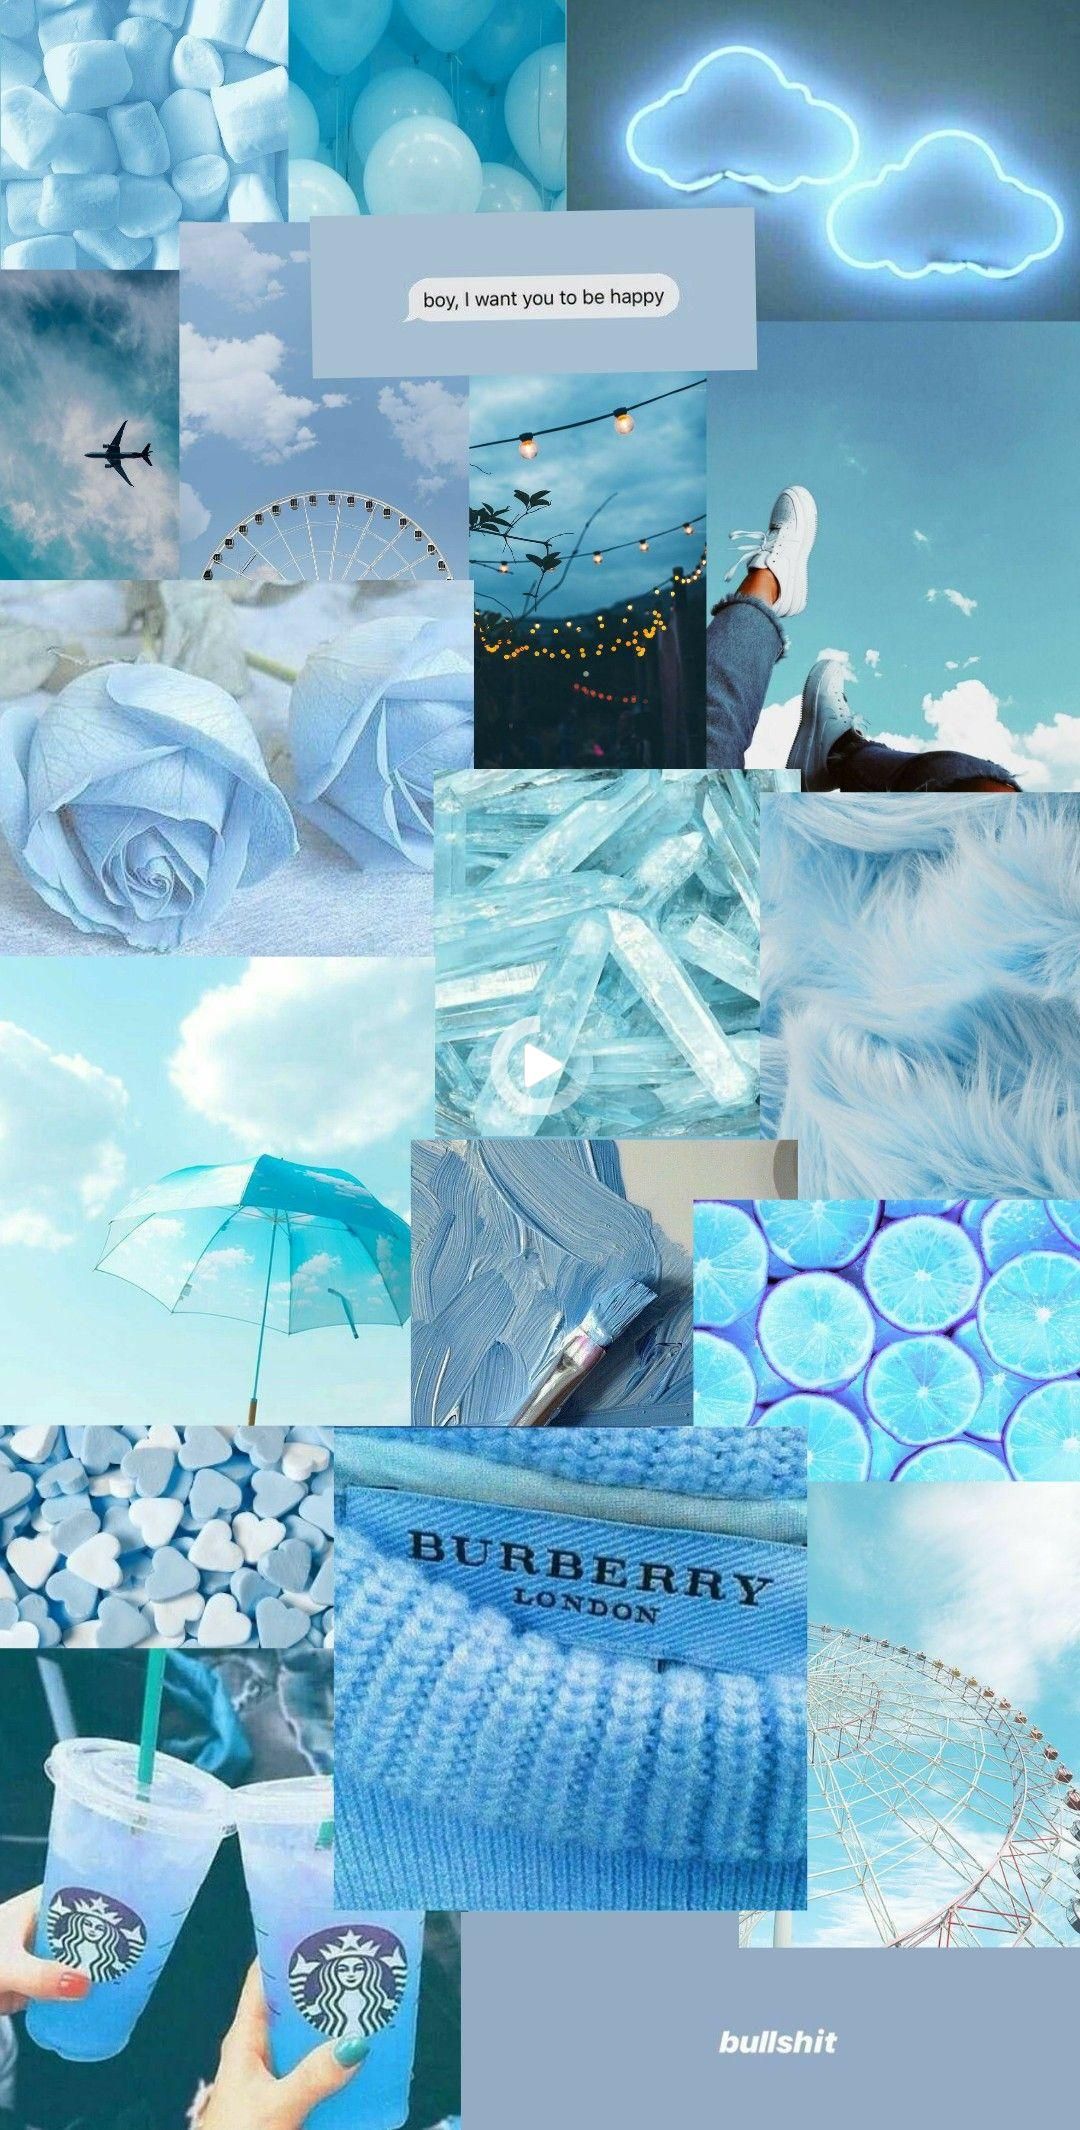 Aesthetic Blue Wallpaper in 2023  Blue wallpapers, Wallpaper, Aesthetic  wallpapers